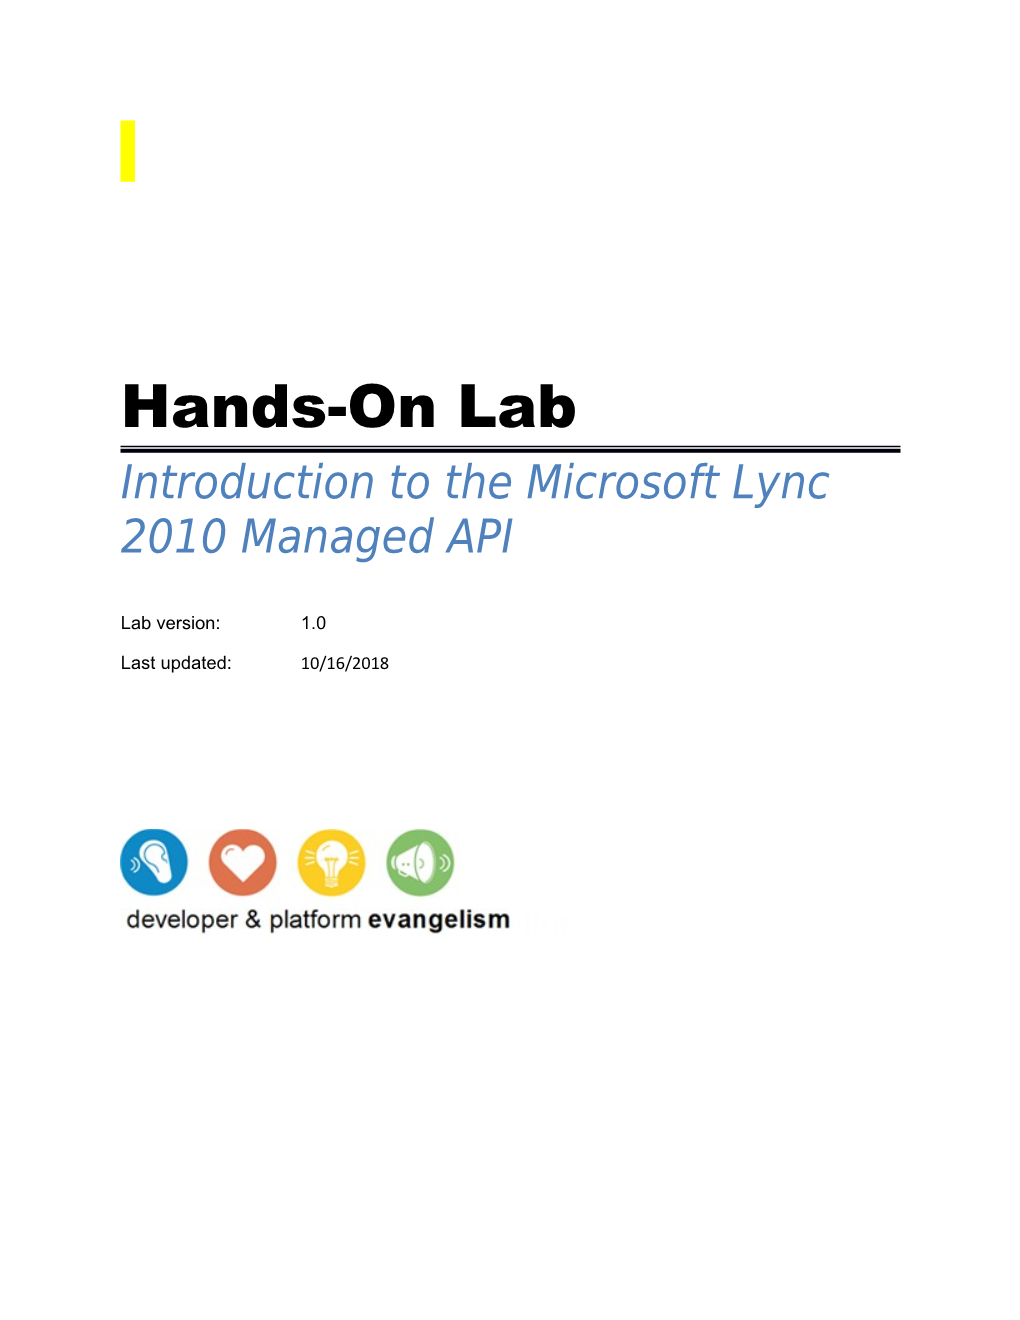 Introduction to the Microsoft Lync 2010 Managed API